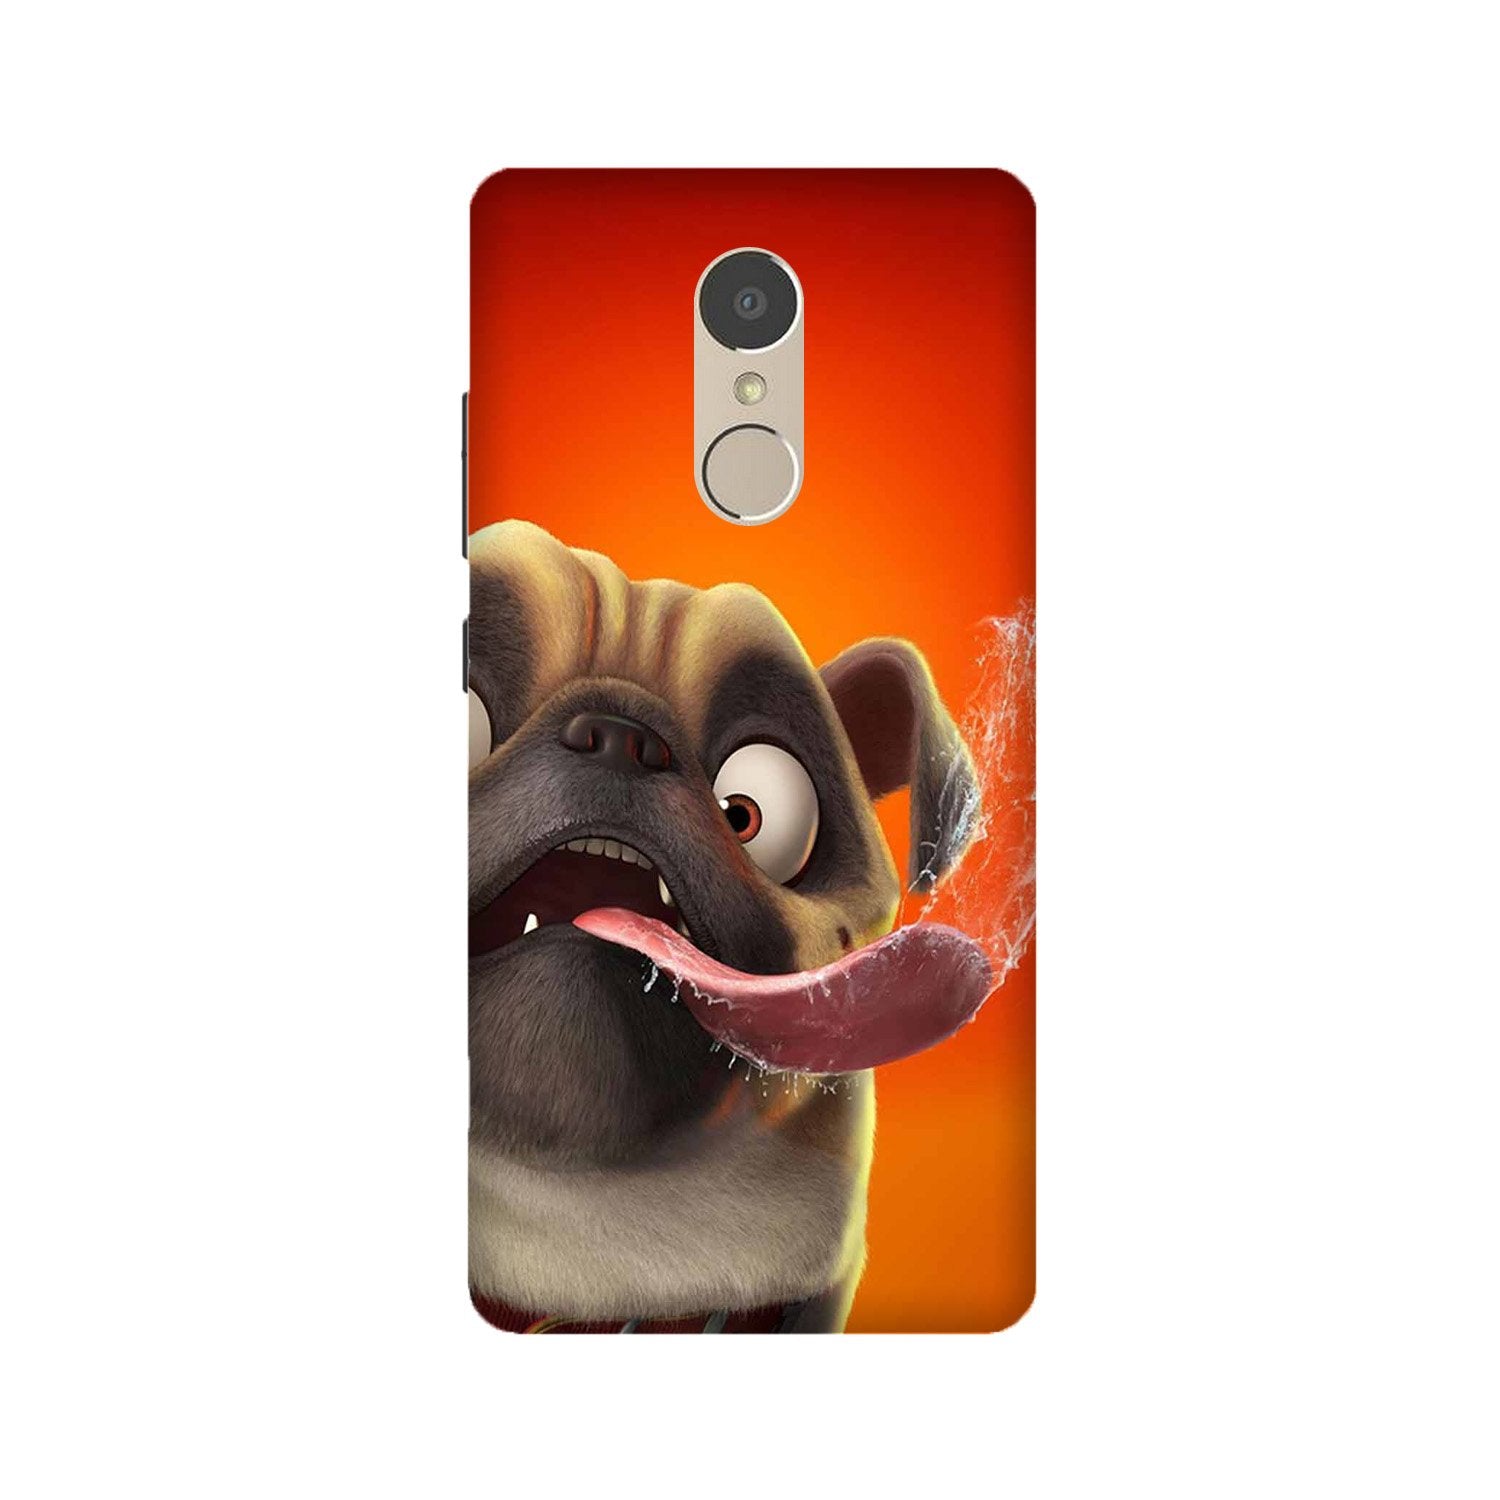 Dog Mobile Back Case for Lenovo K6 Note (Design - 343)